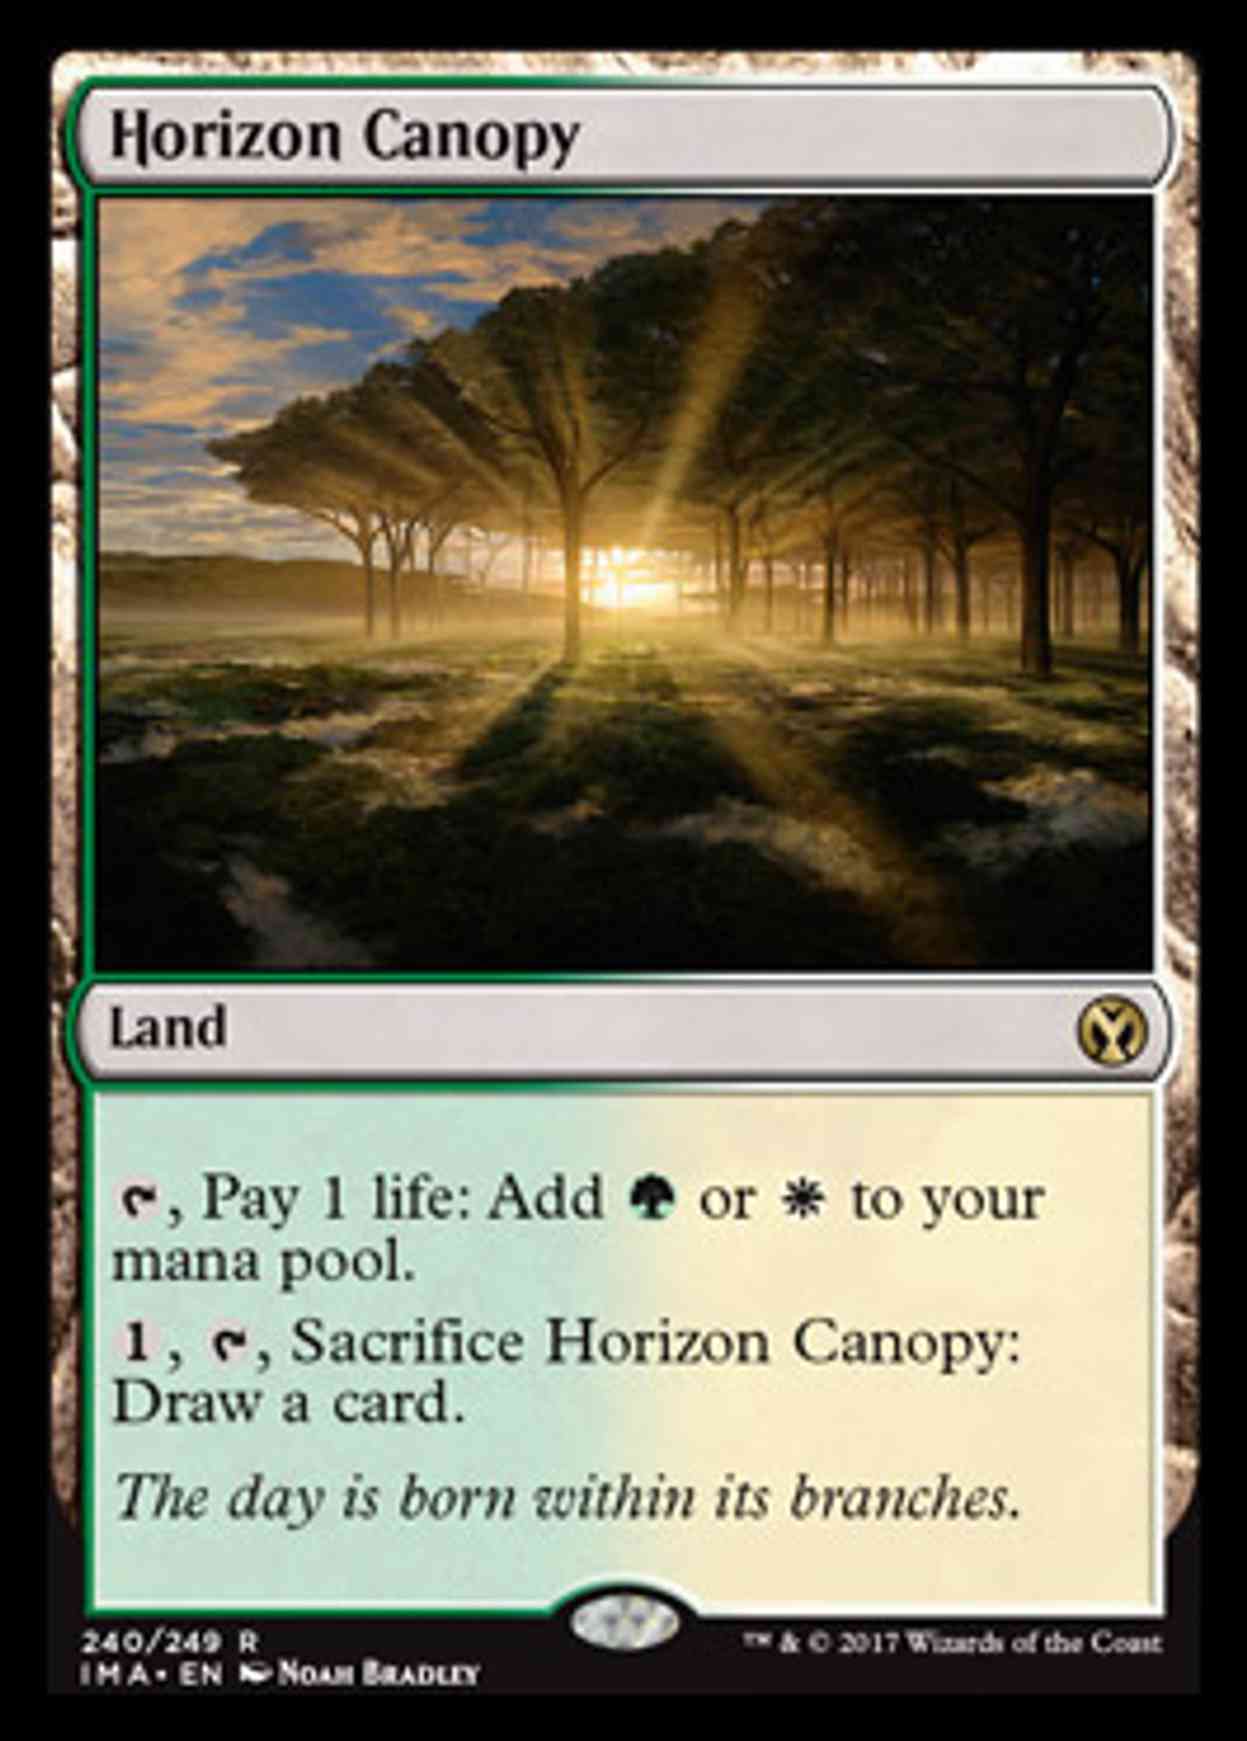 Horizon Canopy magic card front